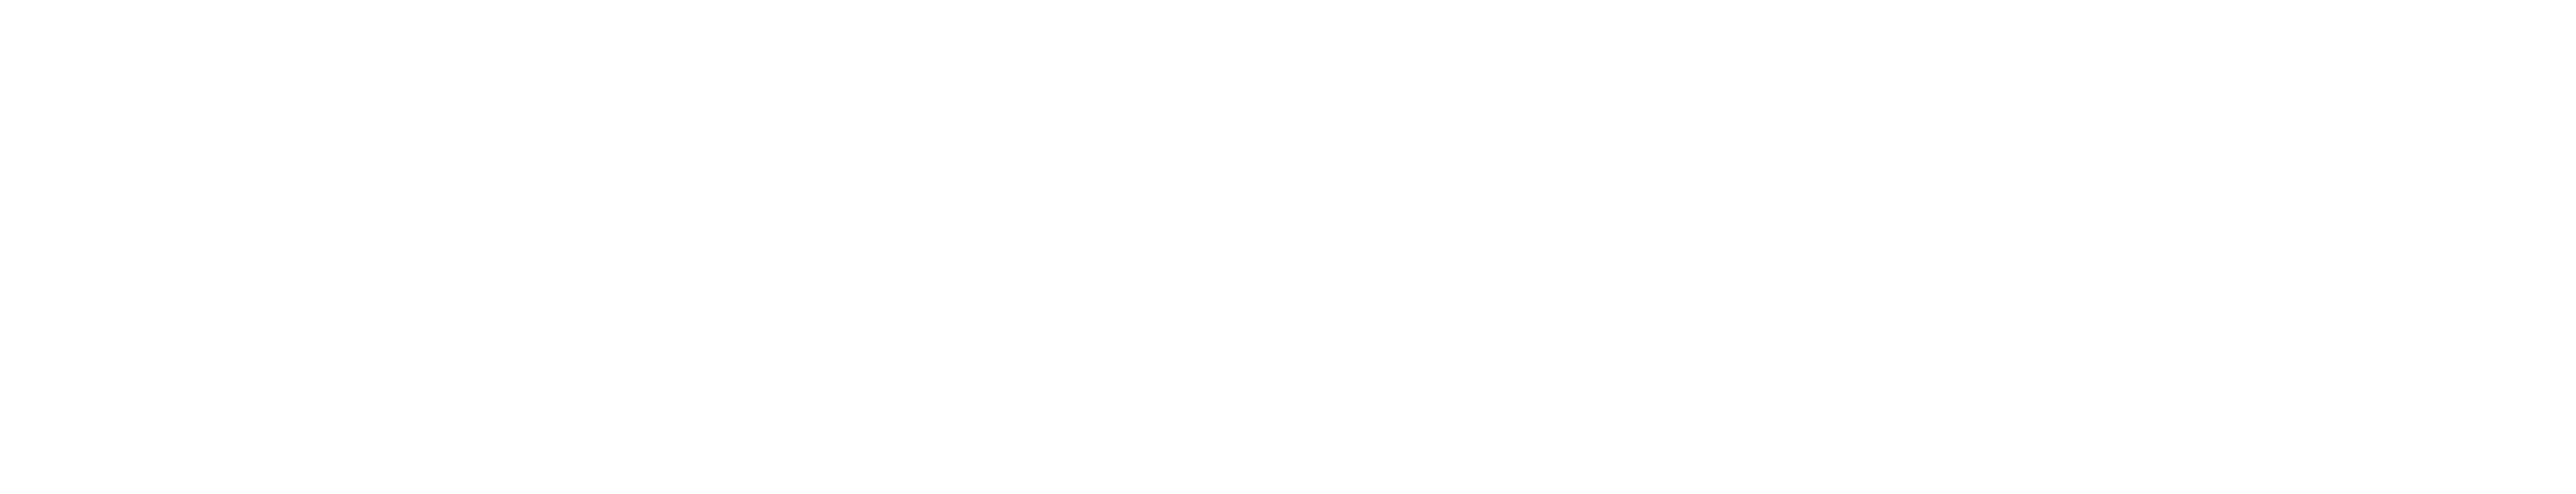 Happy Birthday, Toby Simpson logo